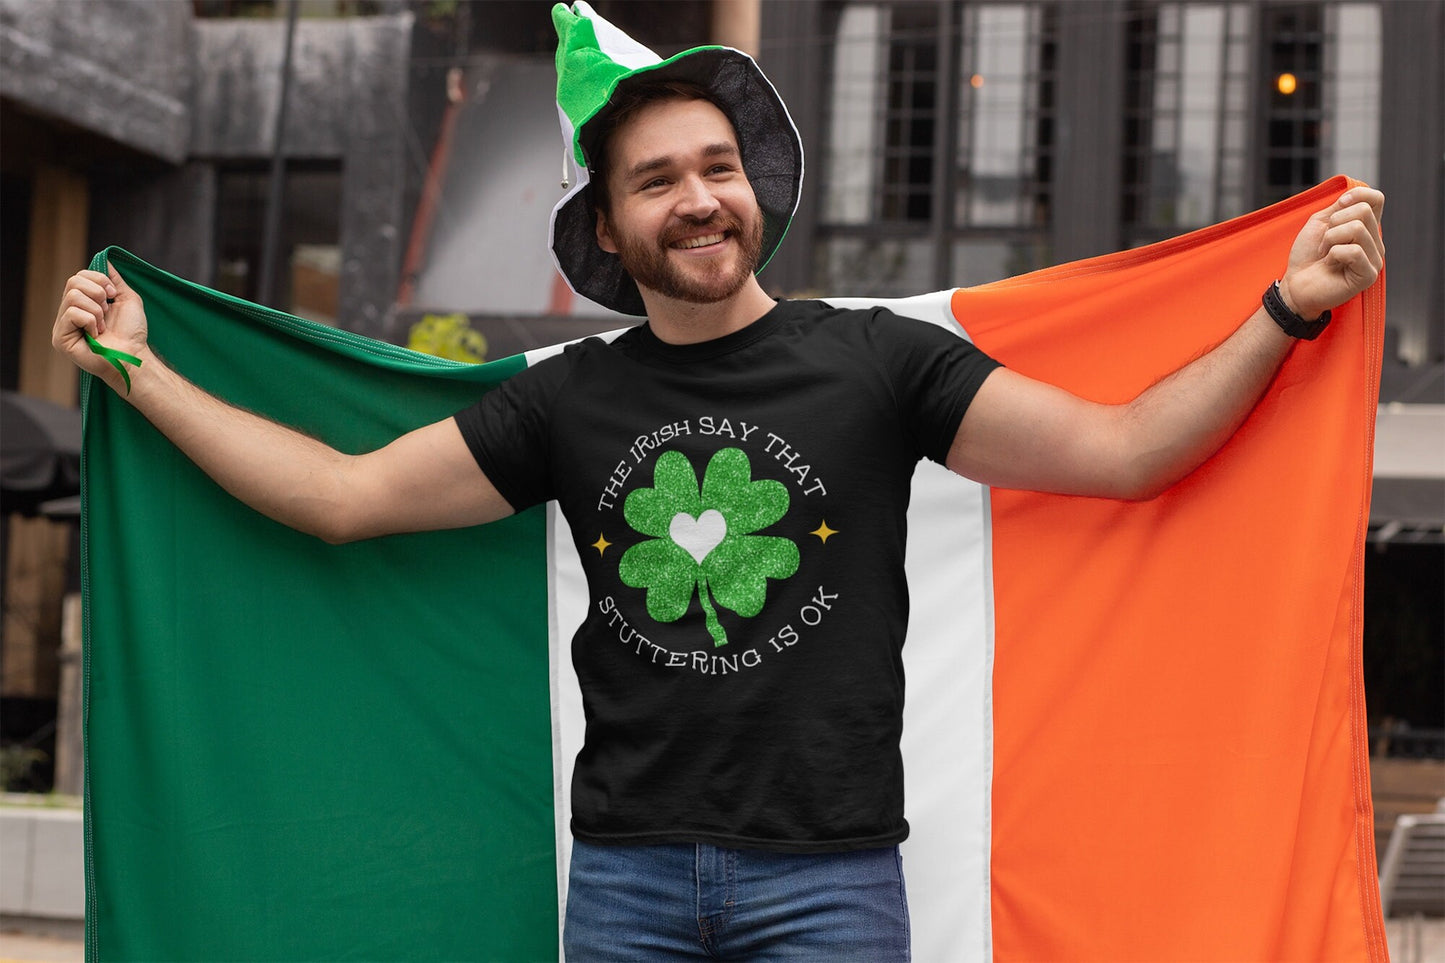 St. Patrick's Day Irish Say that Stuttering is OK Unisex T-Shirt